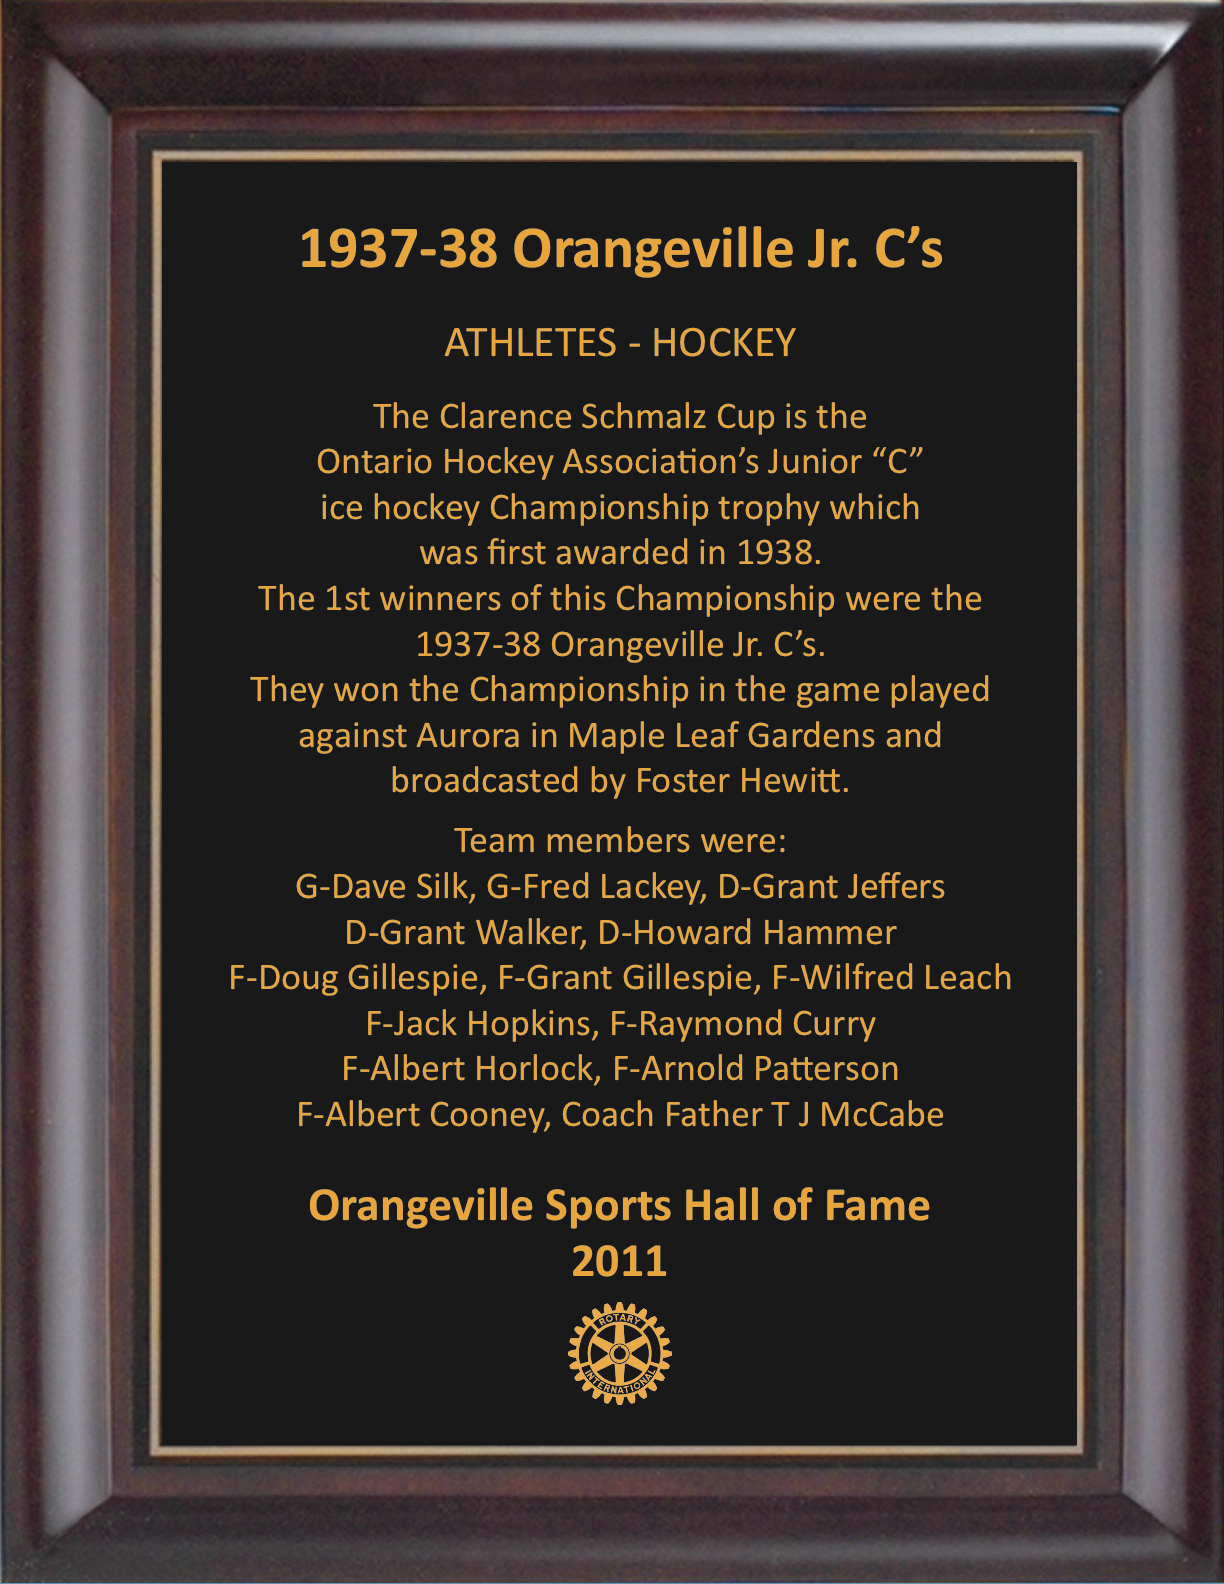 Orangeville Jr Cs 2011 Hall of Fame Plaque